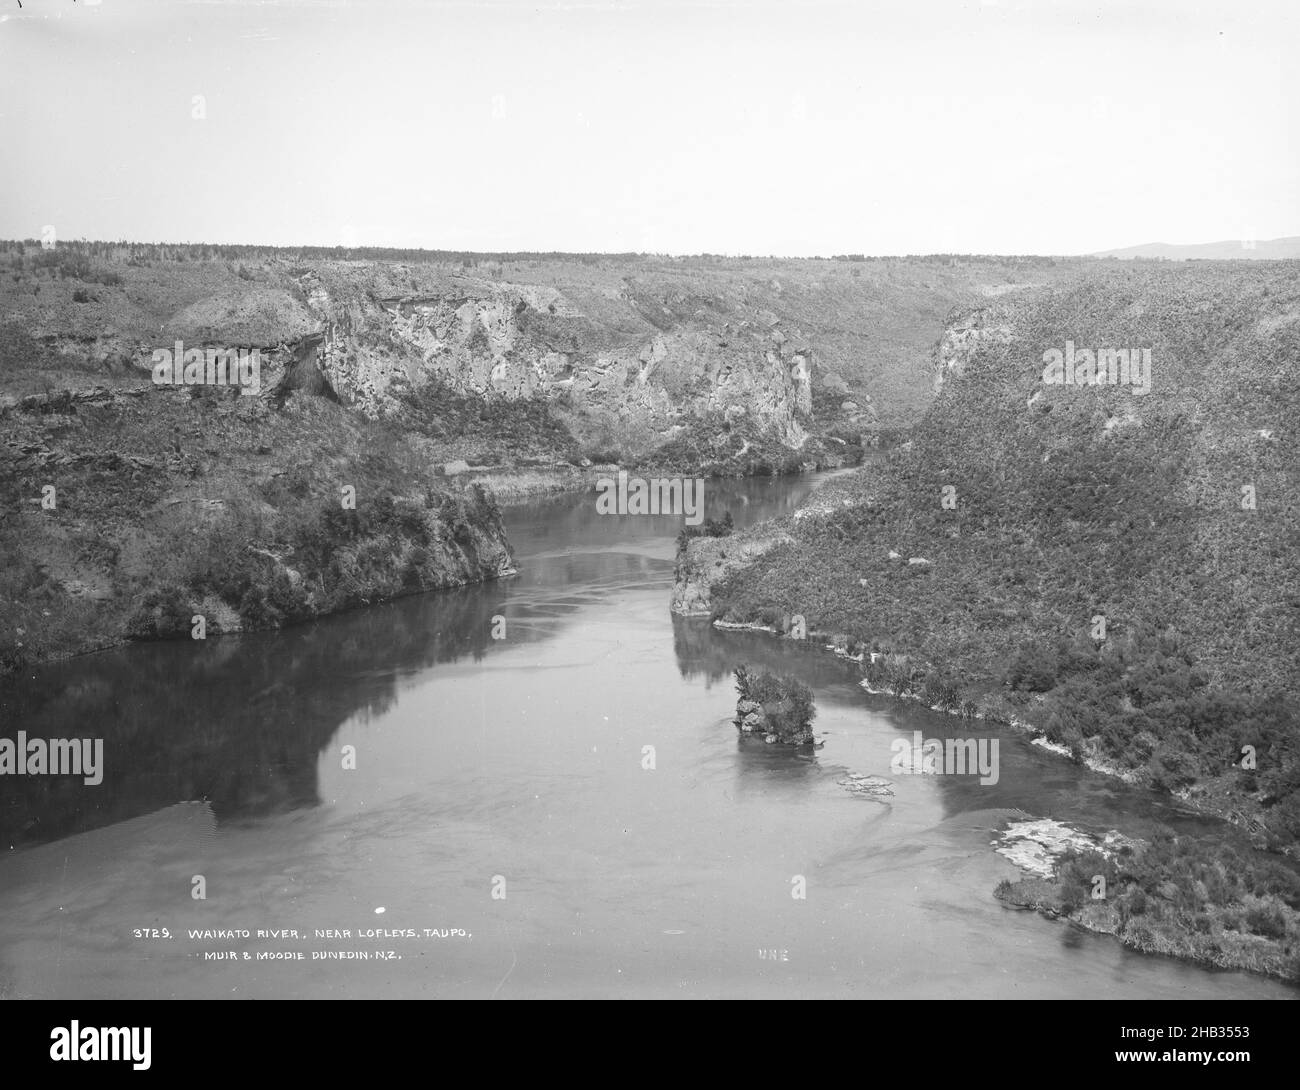 Waikato River, near Lofleys, Taupo, Burton Brothers studio, photography studio, New Zealand, gelatin dry plate process Stock Photo